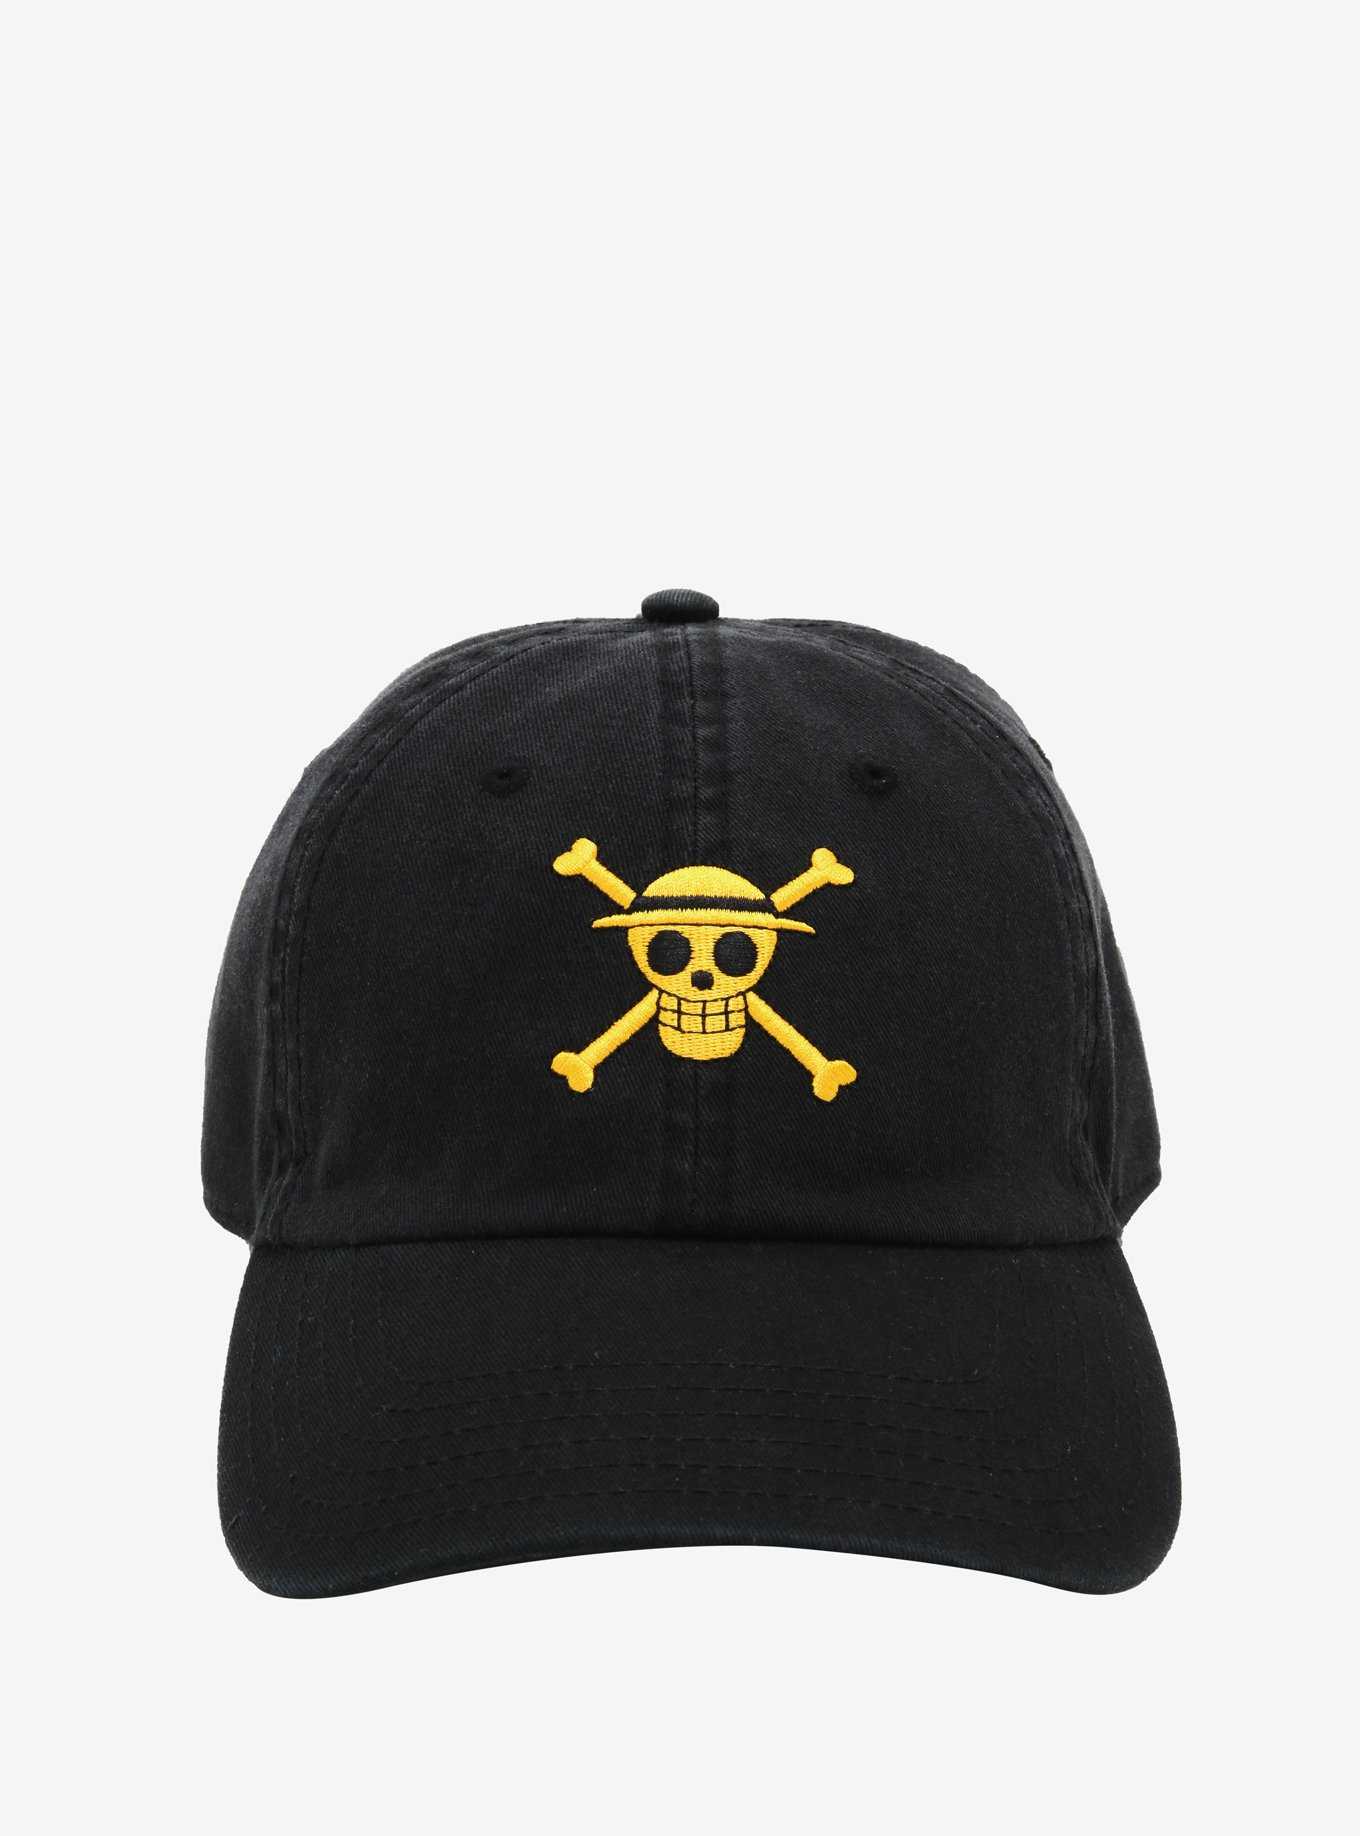 NHL Skull Cap Hats for Men